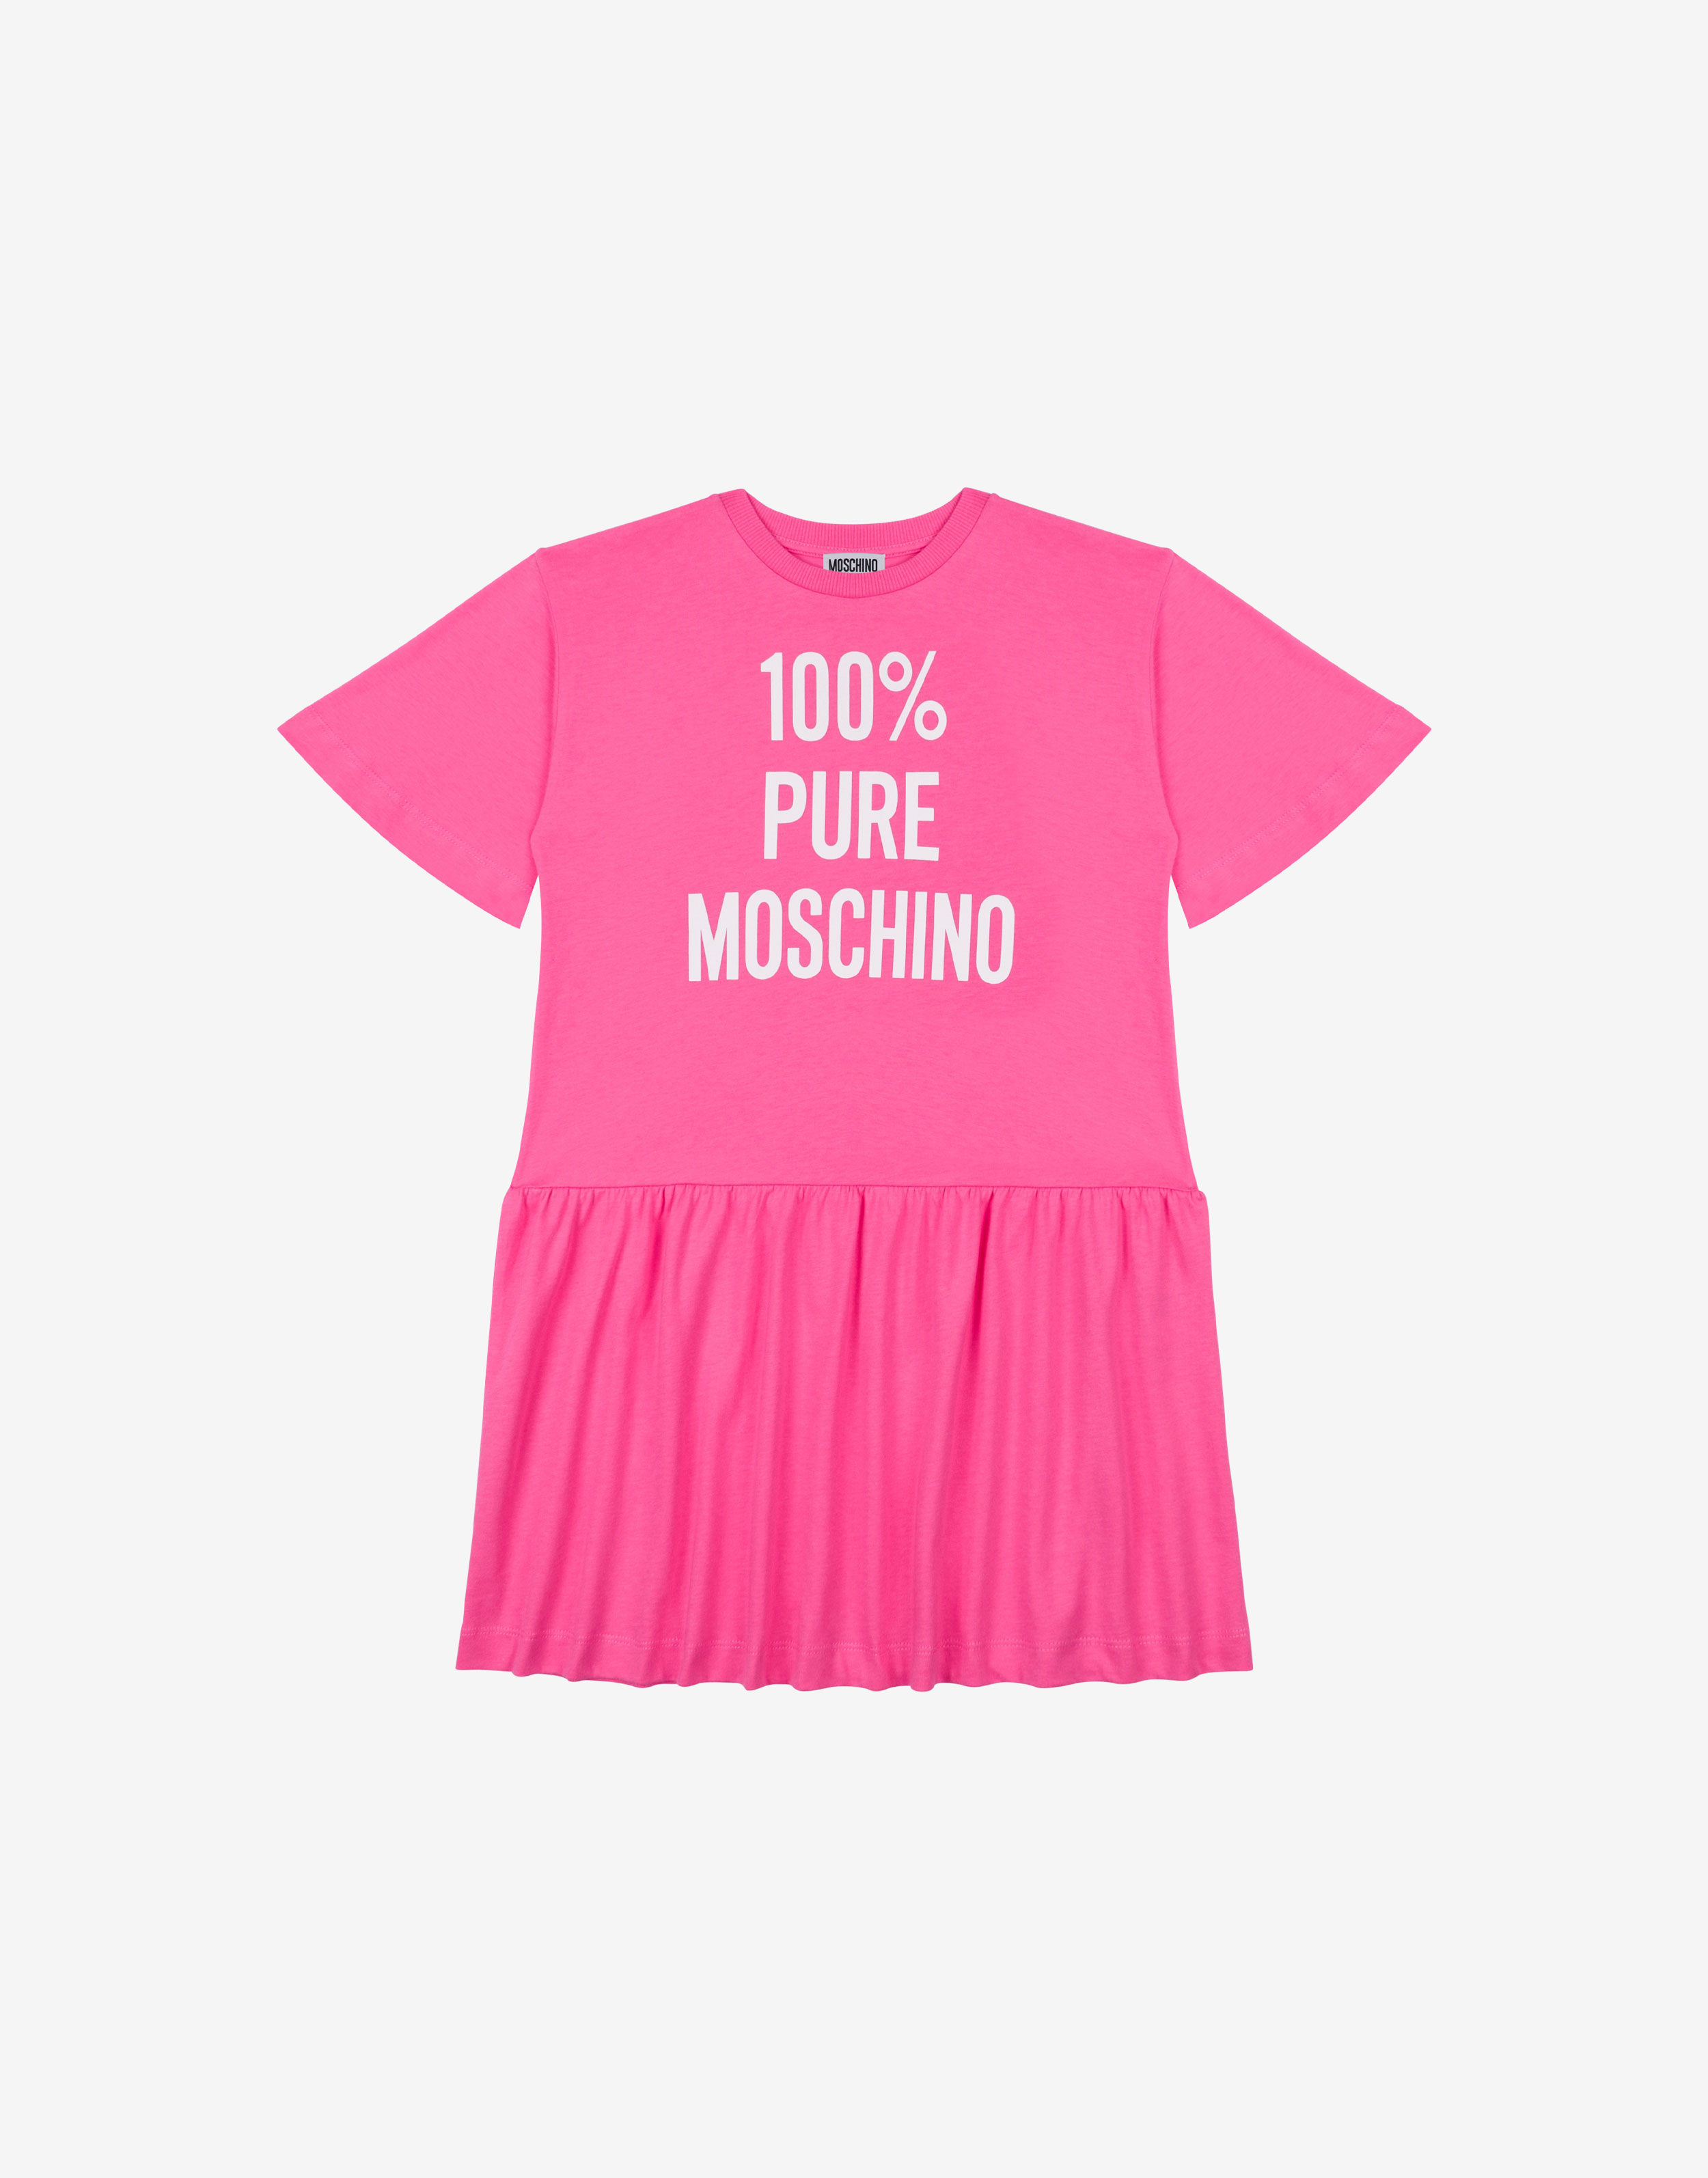 100% Pure Moschino jersey dress